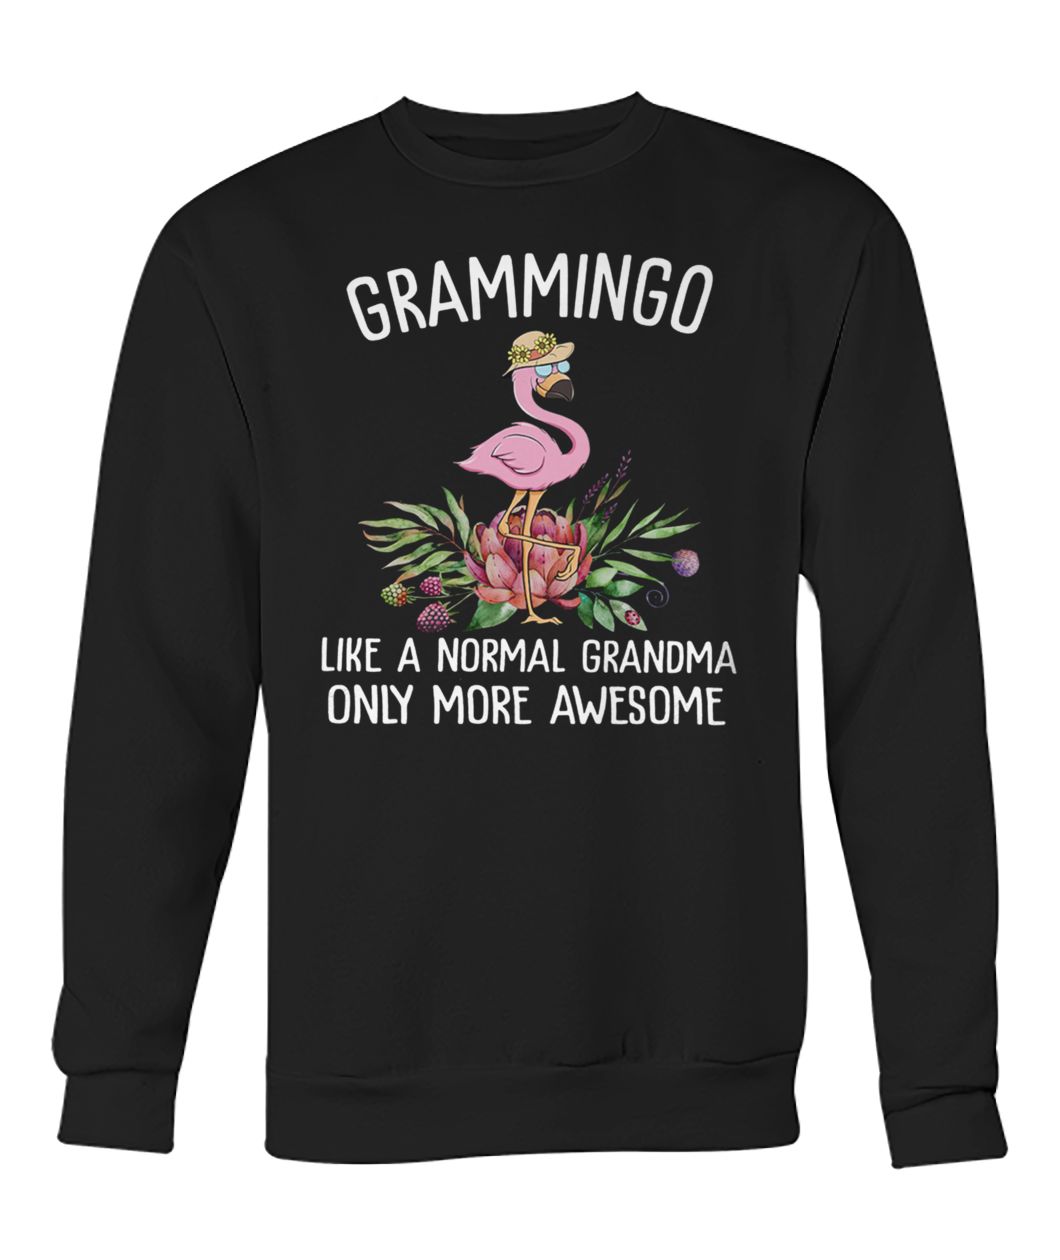 Grammingo like a normal grandma only more awesome crew neck sweatshirt